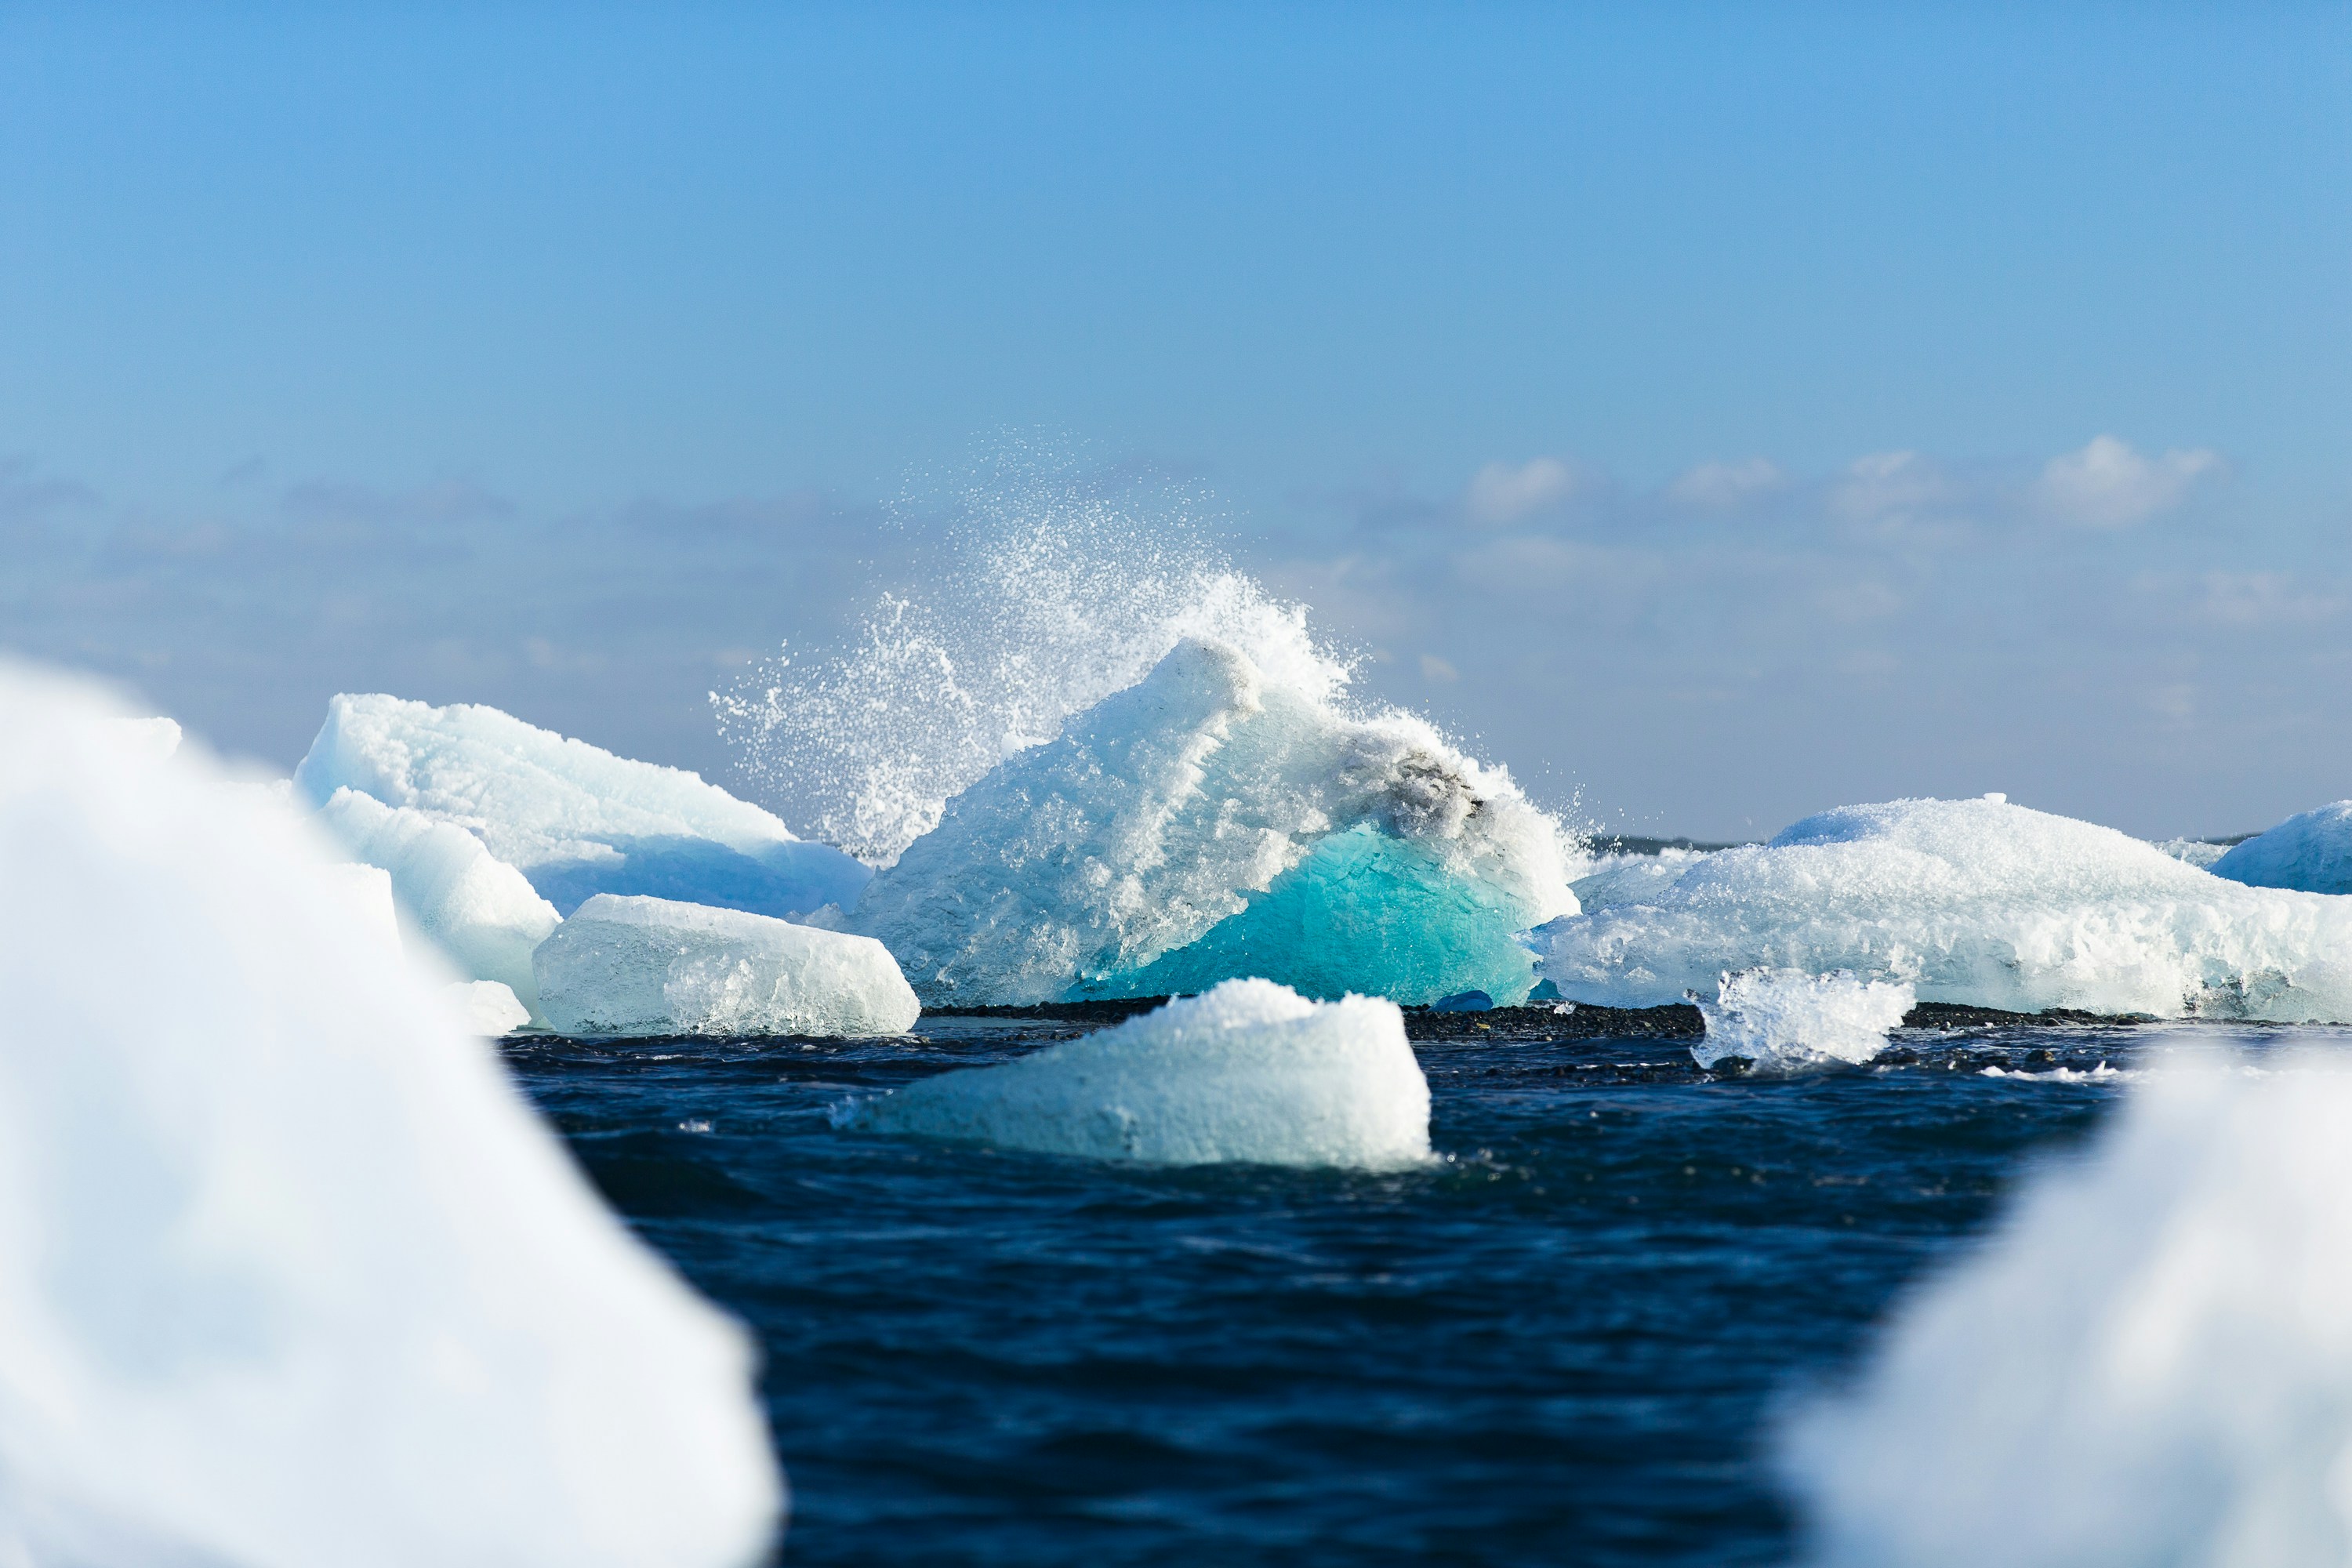 Icebergs of Iceland’s Vatnajokull